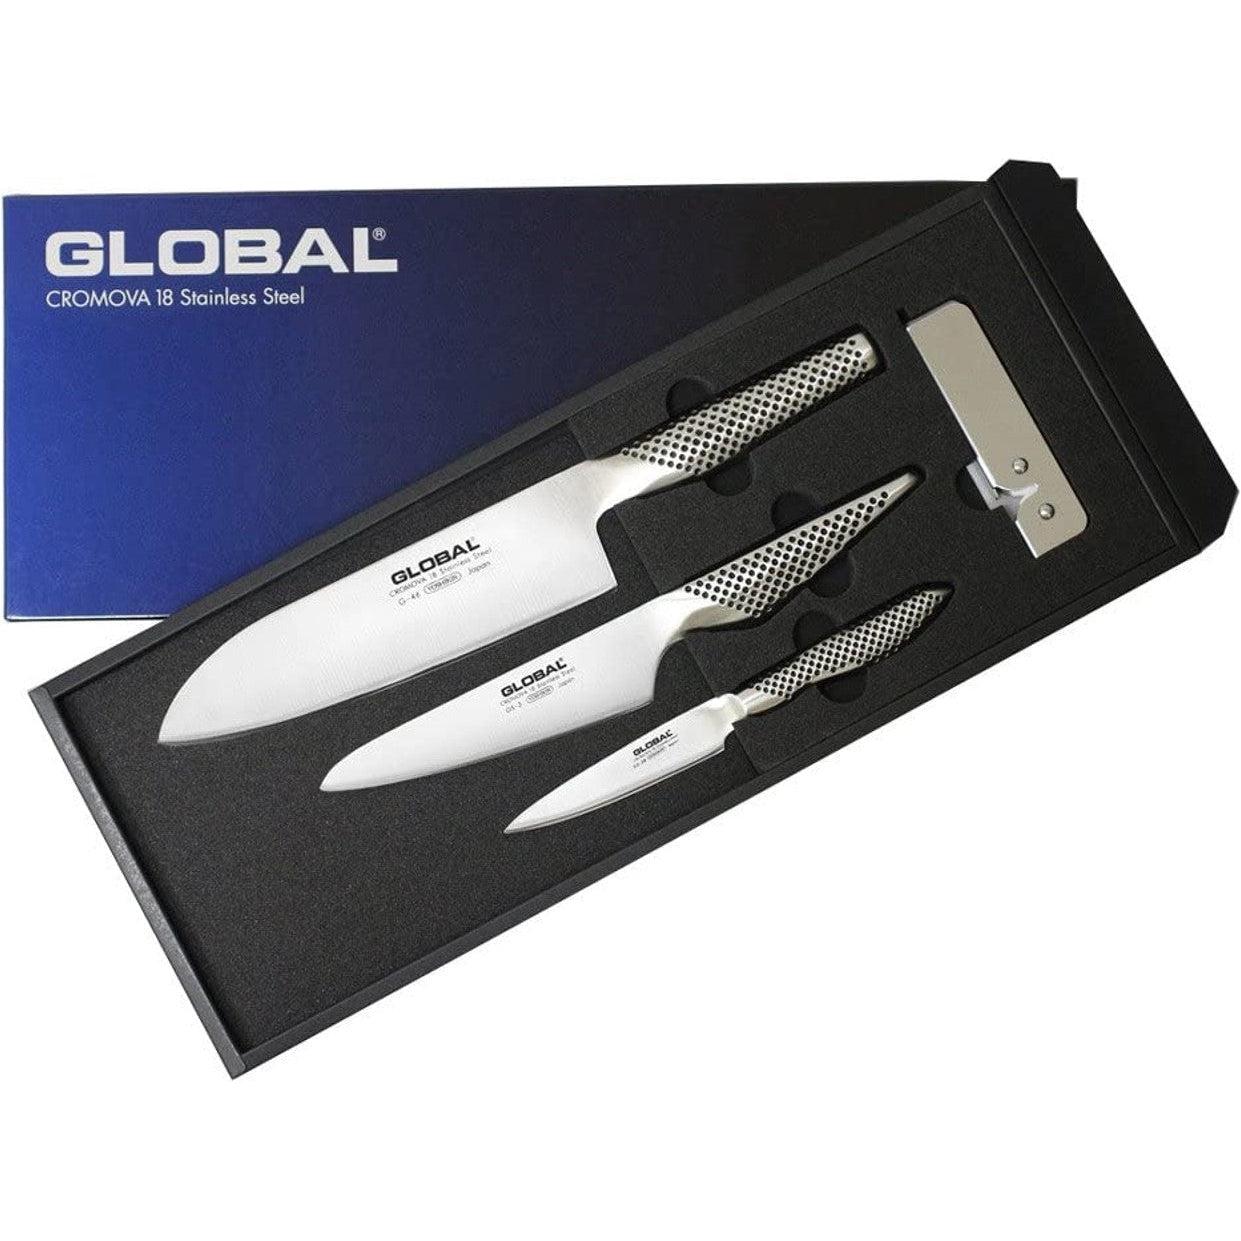 Global 2 Piece Knife Set